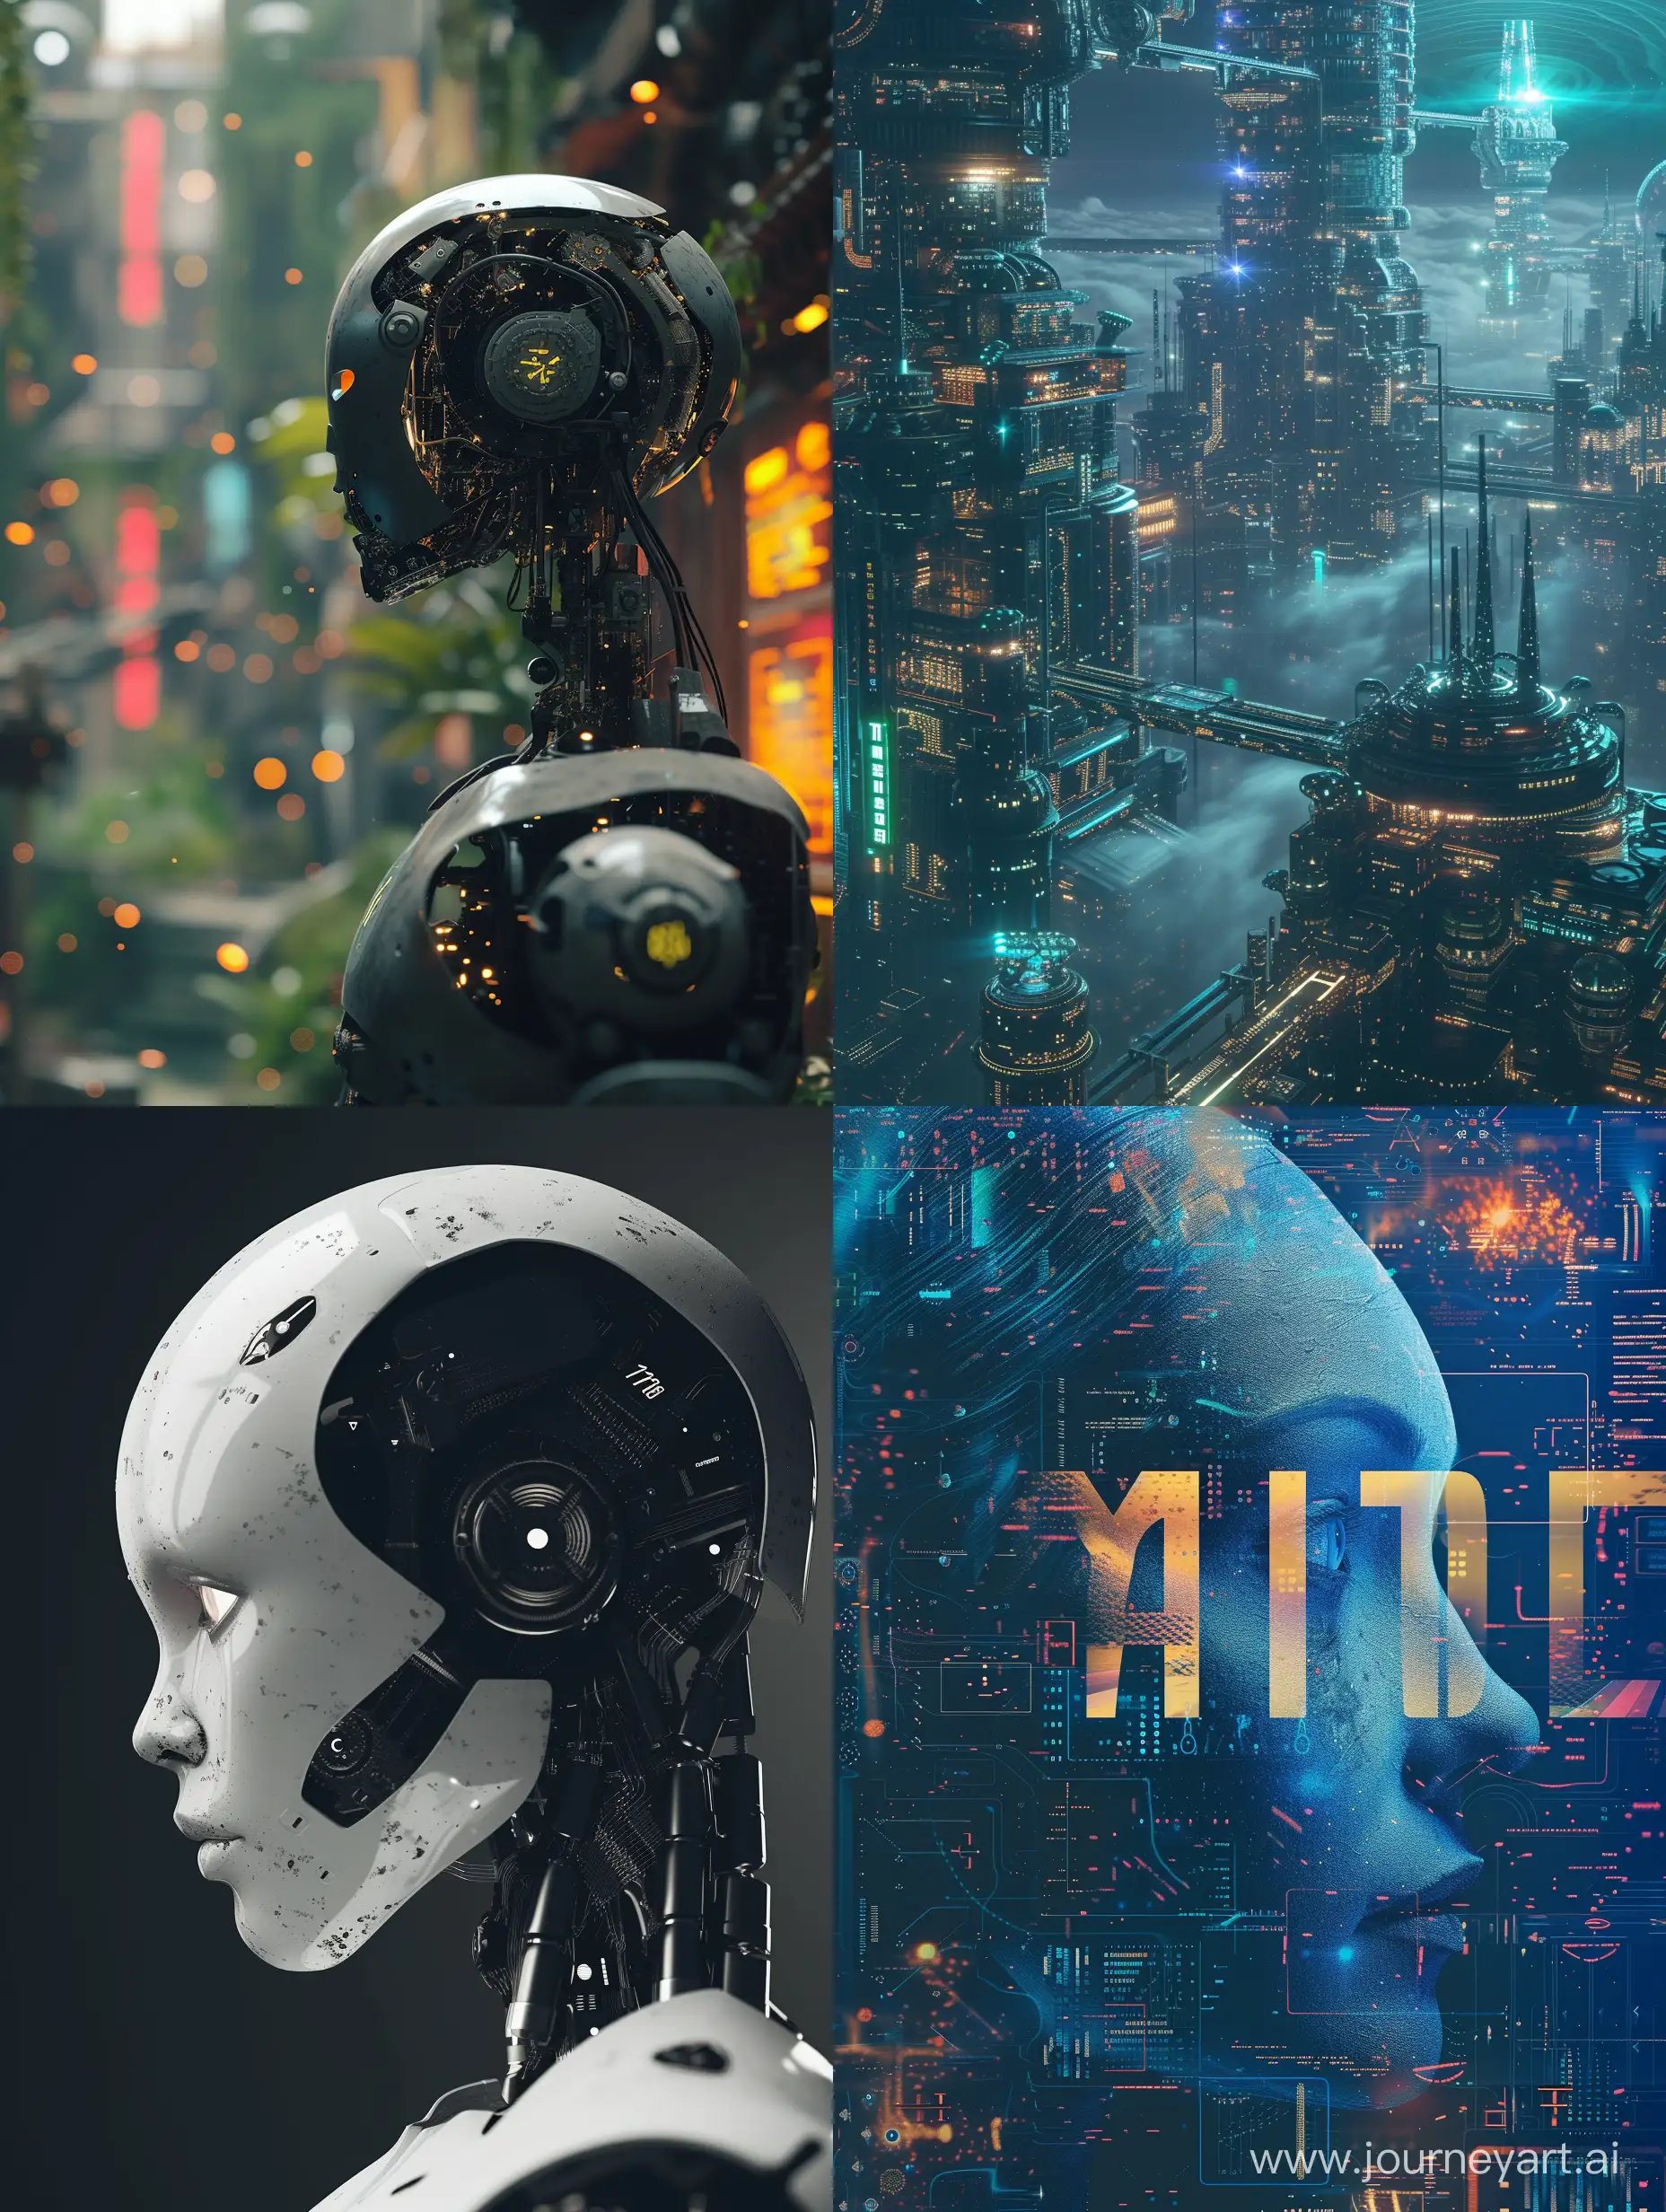 Futuristic-AI-World-with-Vibrant-Colors-and-Advanced-Robotics